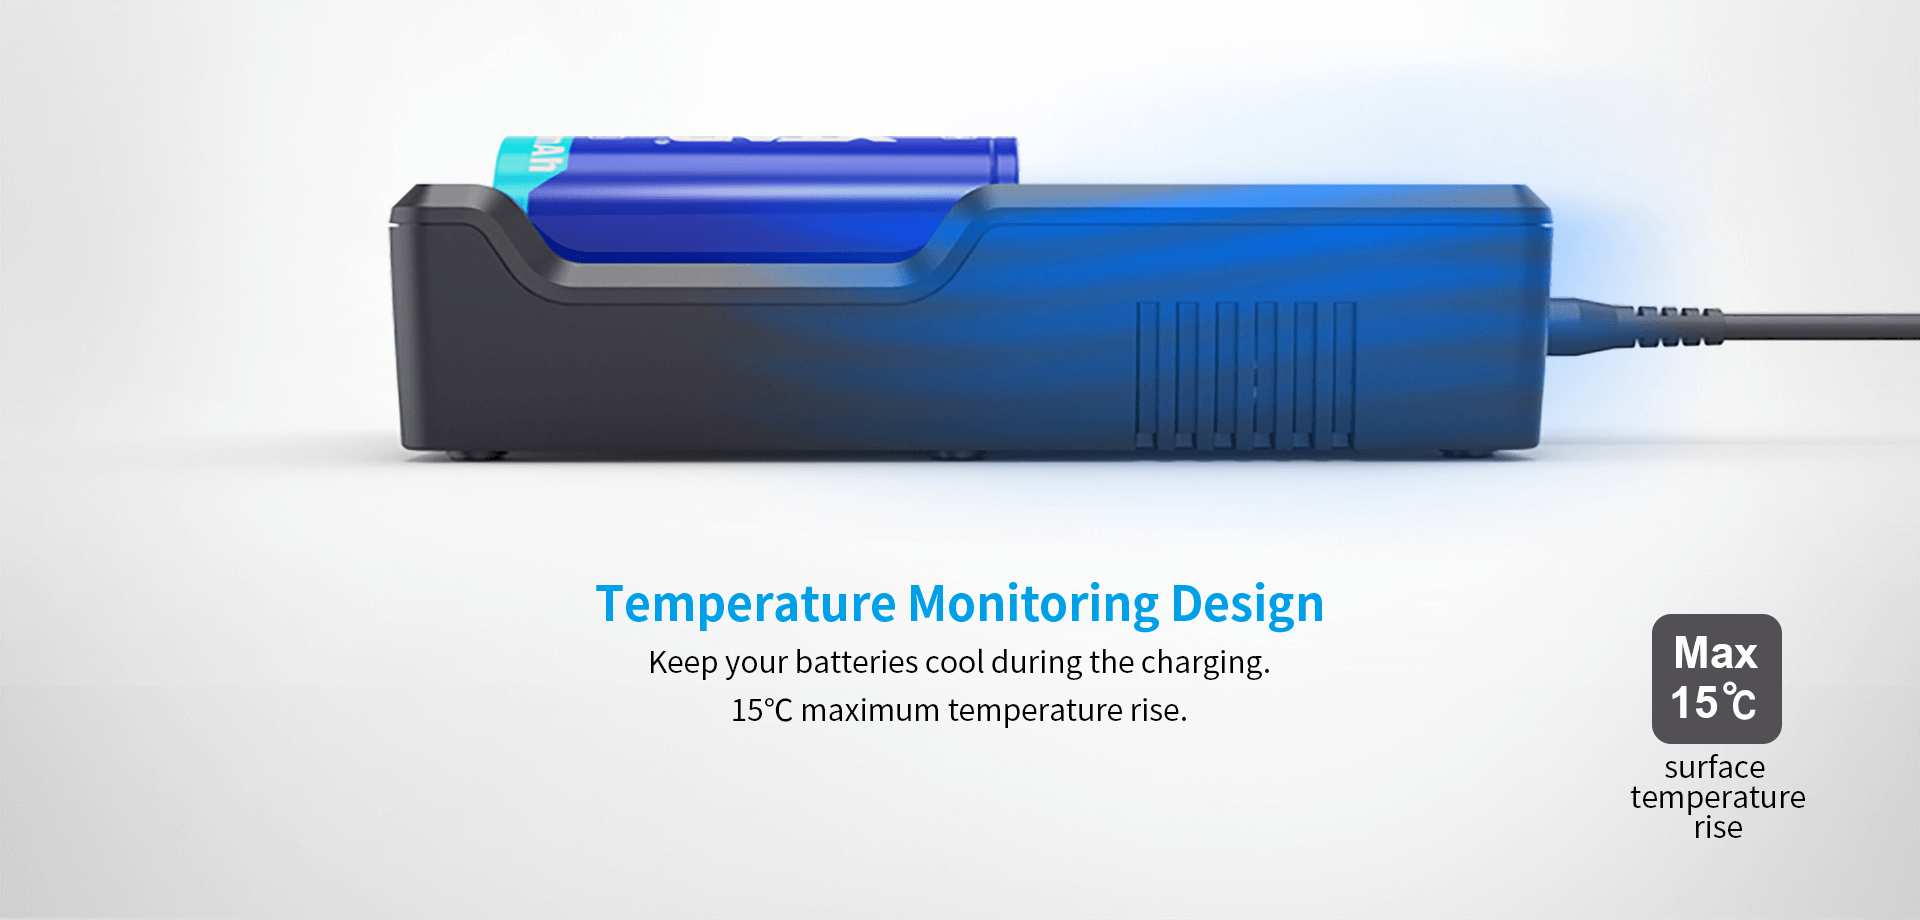 XTAR VC4 Charger | Temperature Monitoring Design